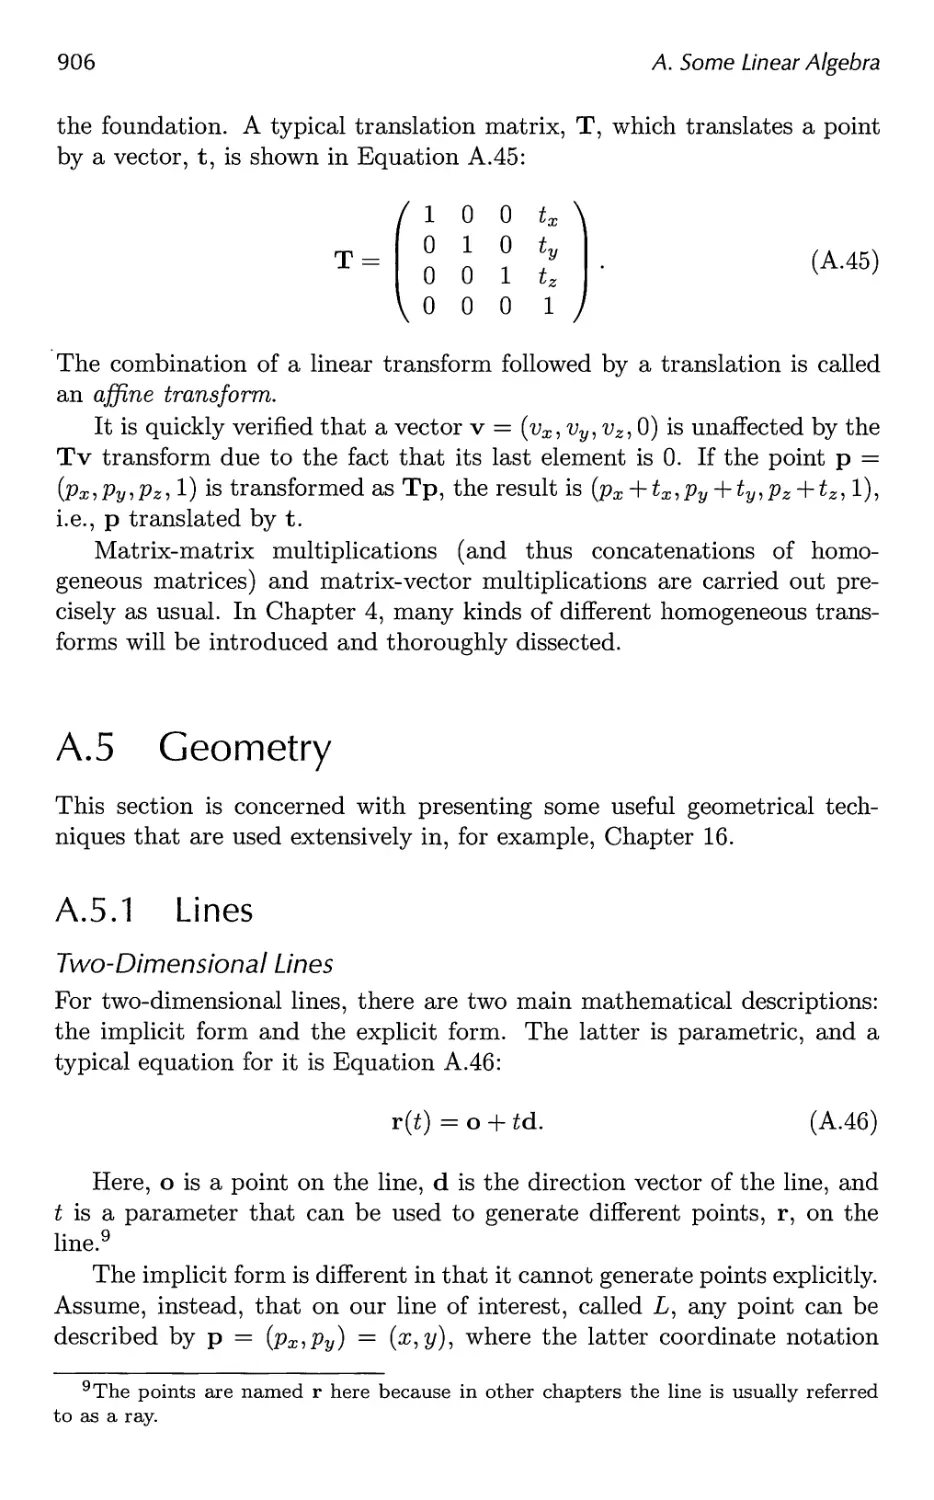 A.5 Geometry